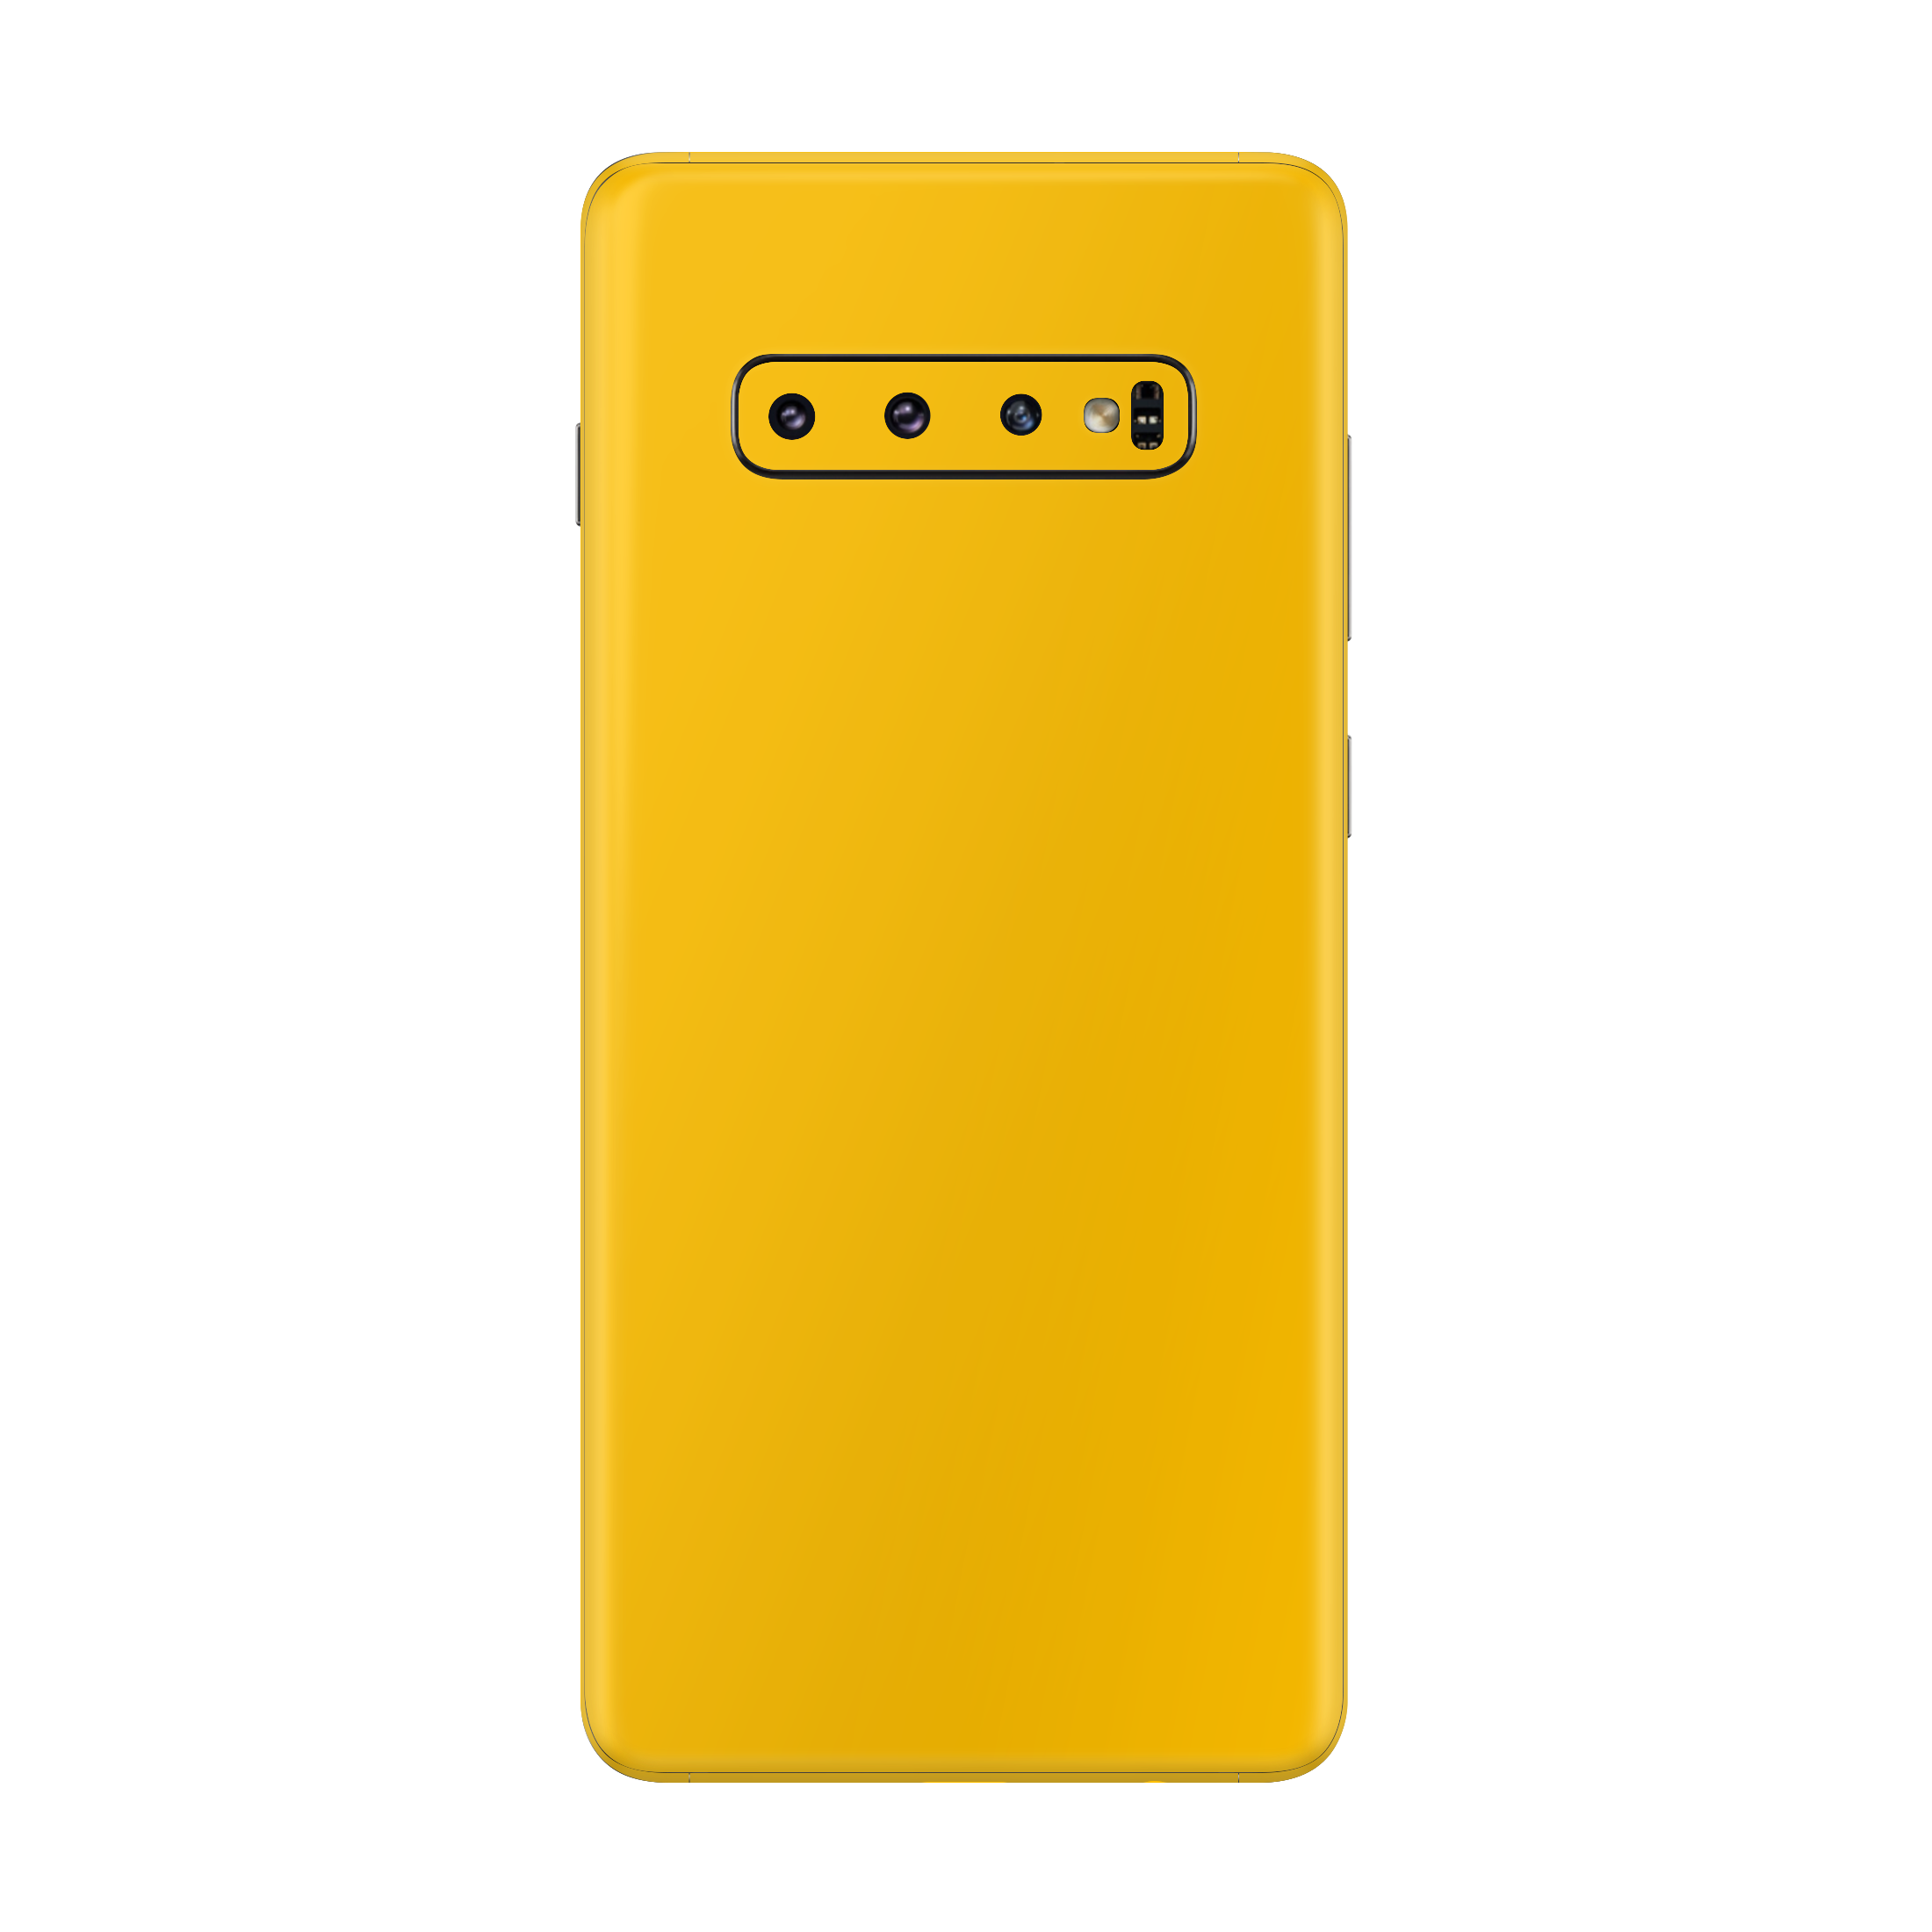 Dot Yellow Skin for Samsung S10 Plus